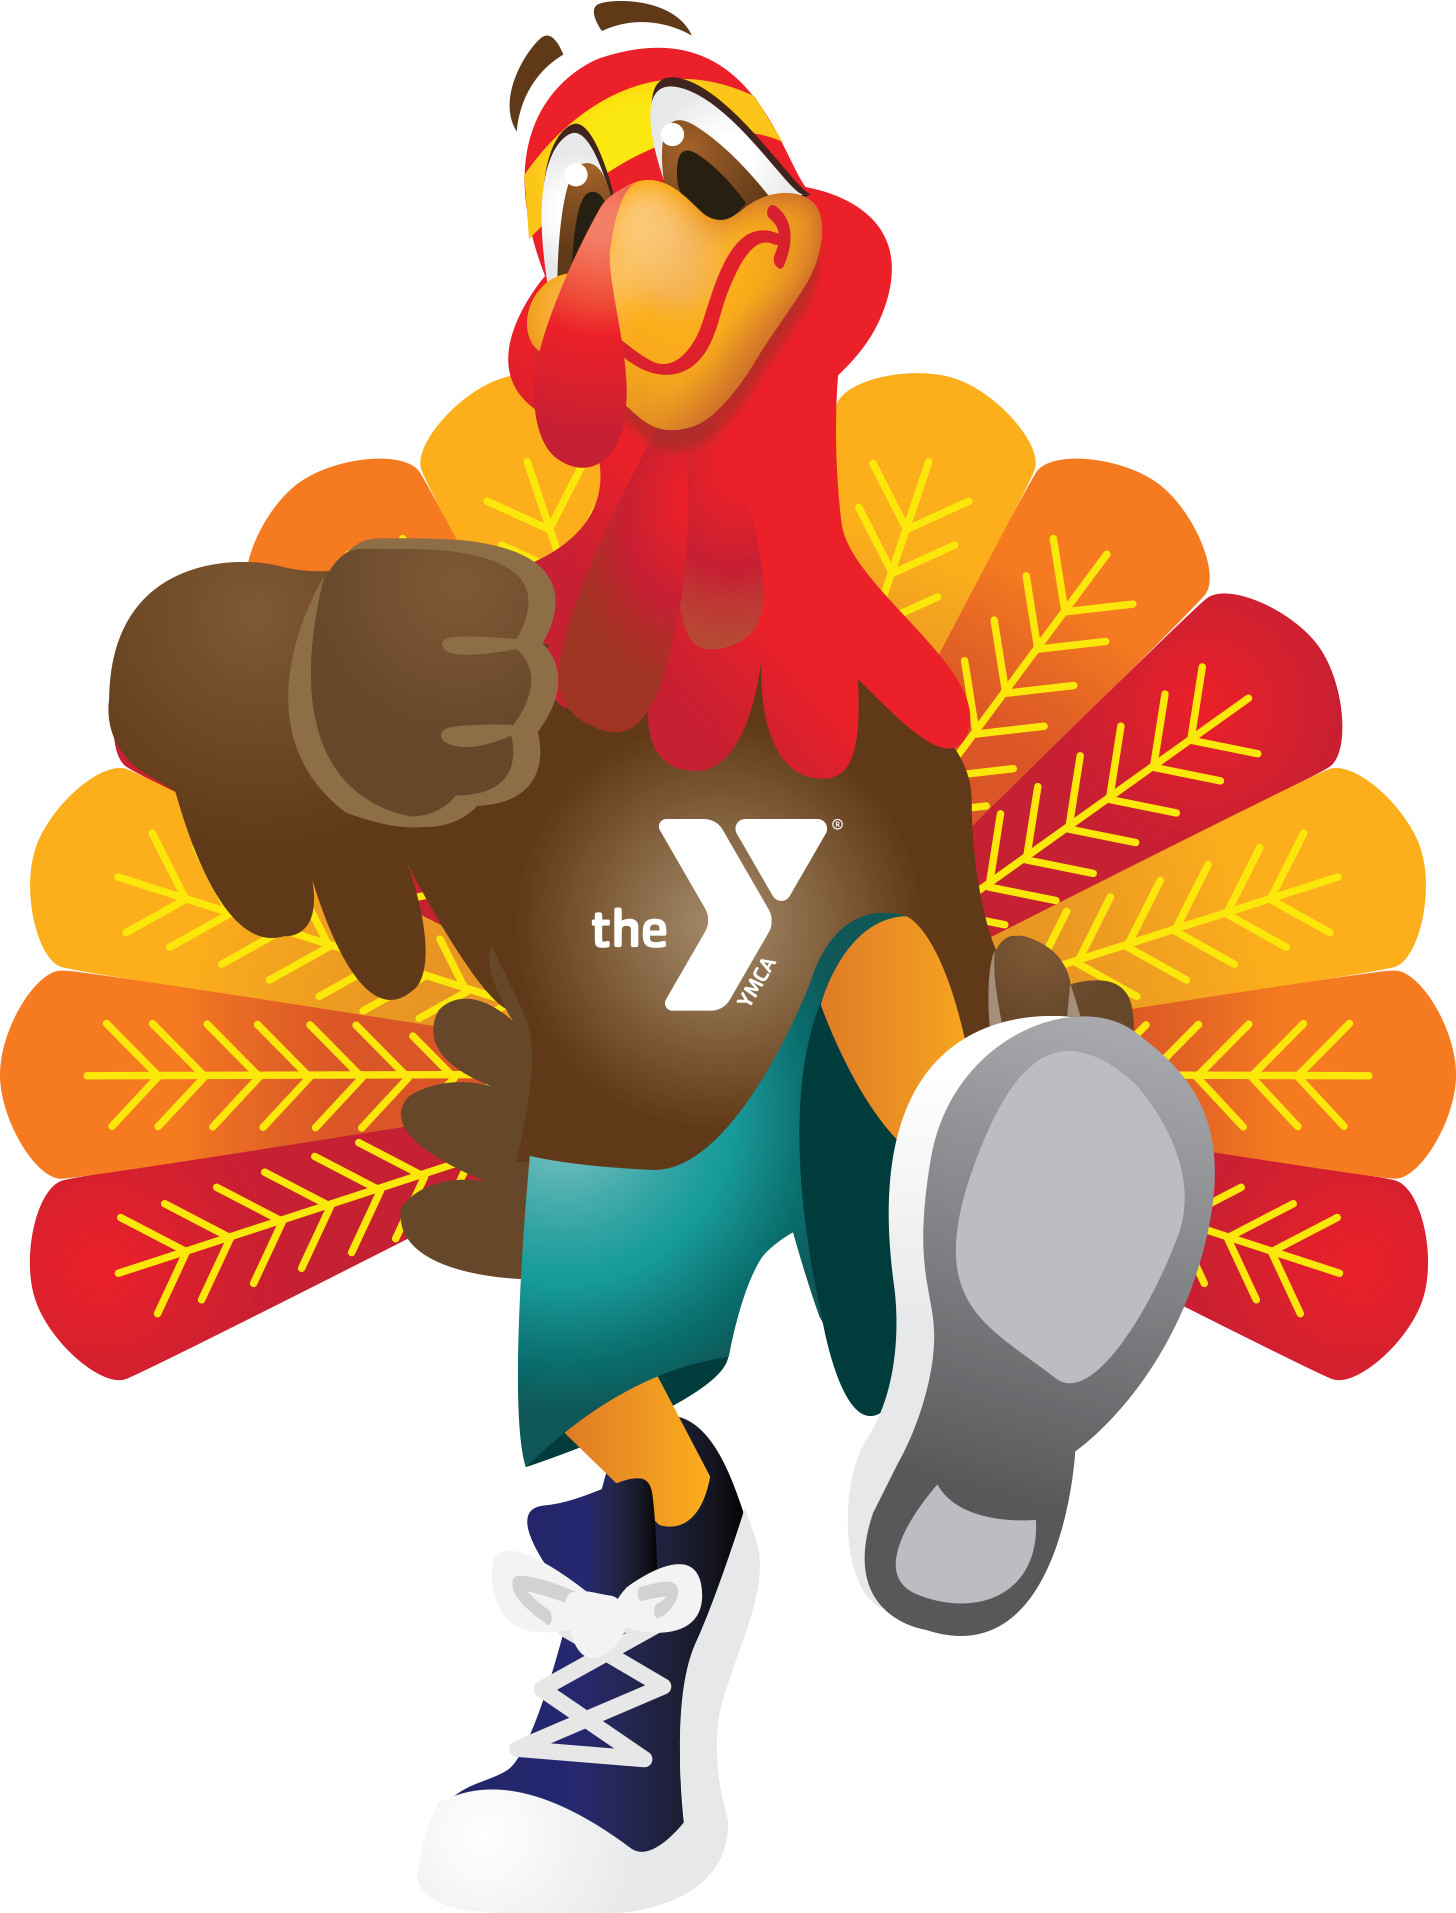 Thanksgiving Day Turkey Trot
 YMCA Announces Turkey Trot 5K and 5K Training Program